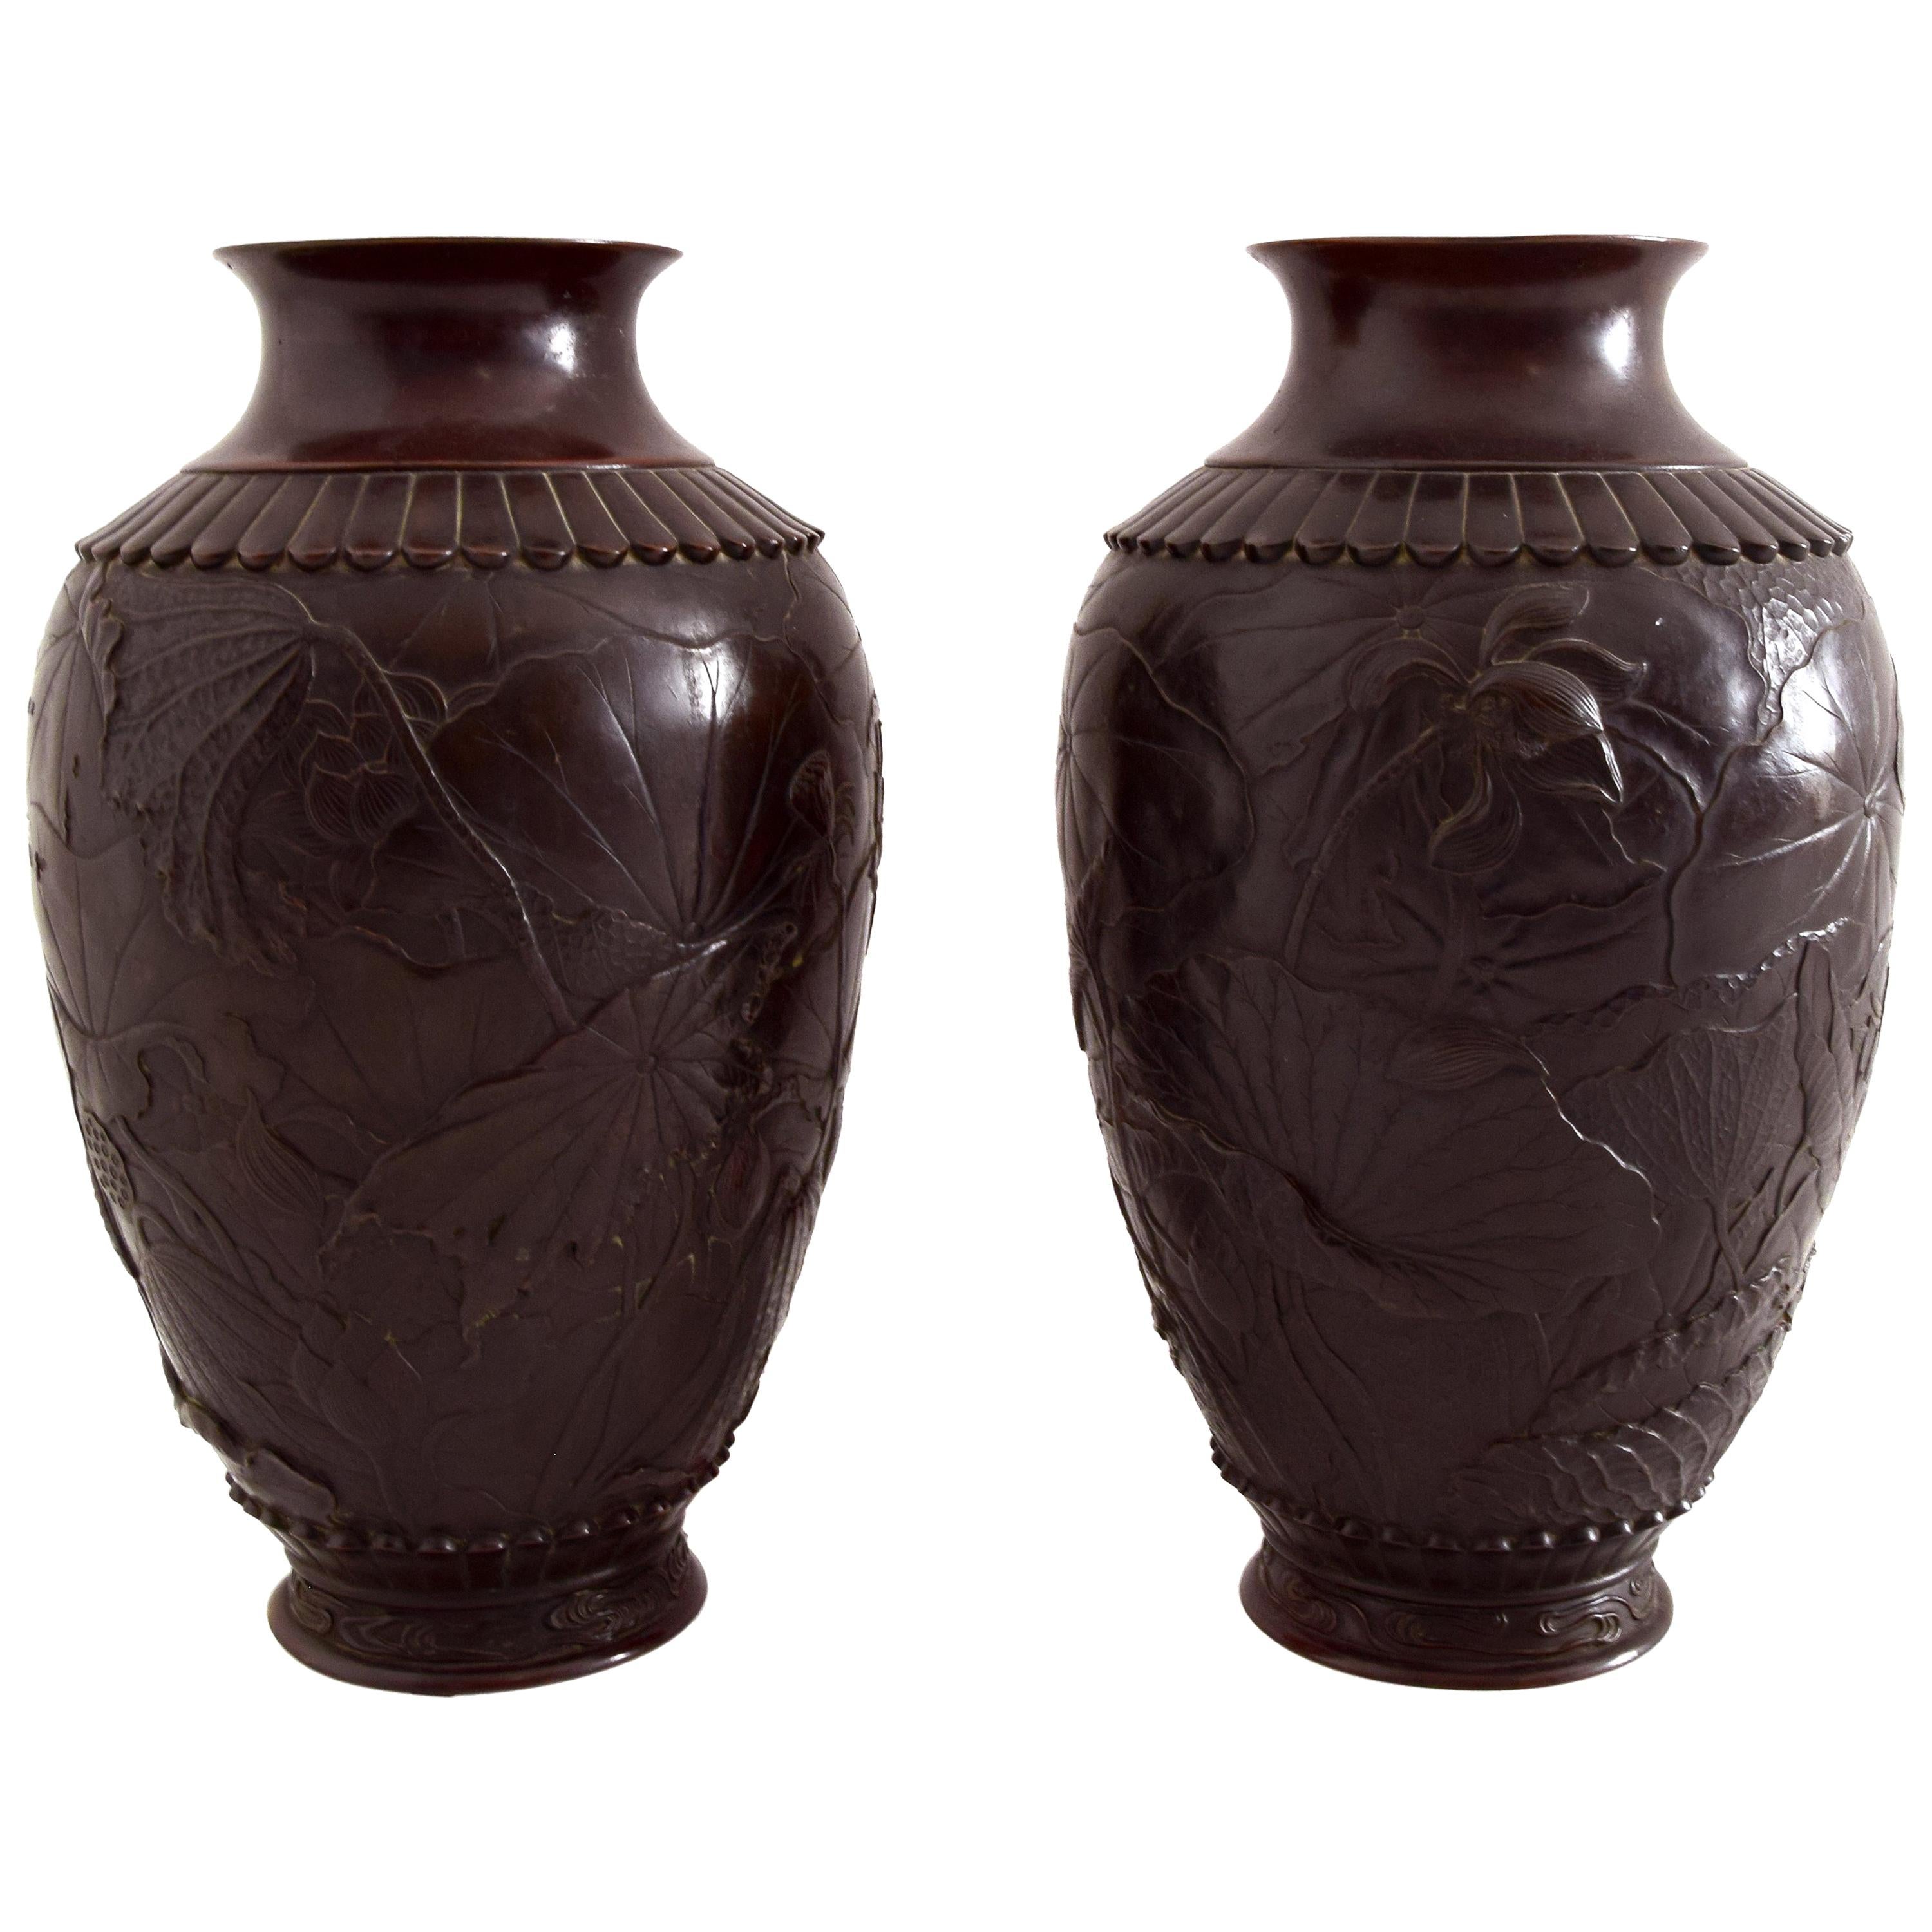 Pair of Japanese Vases, 19th Century